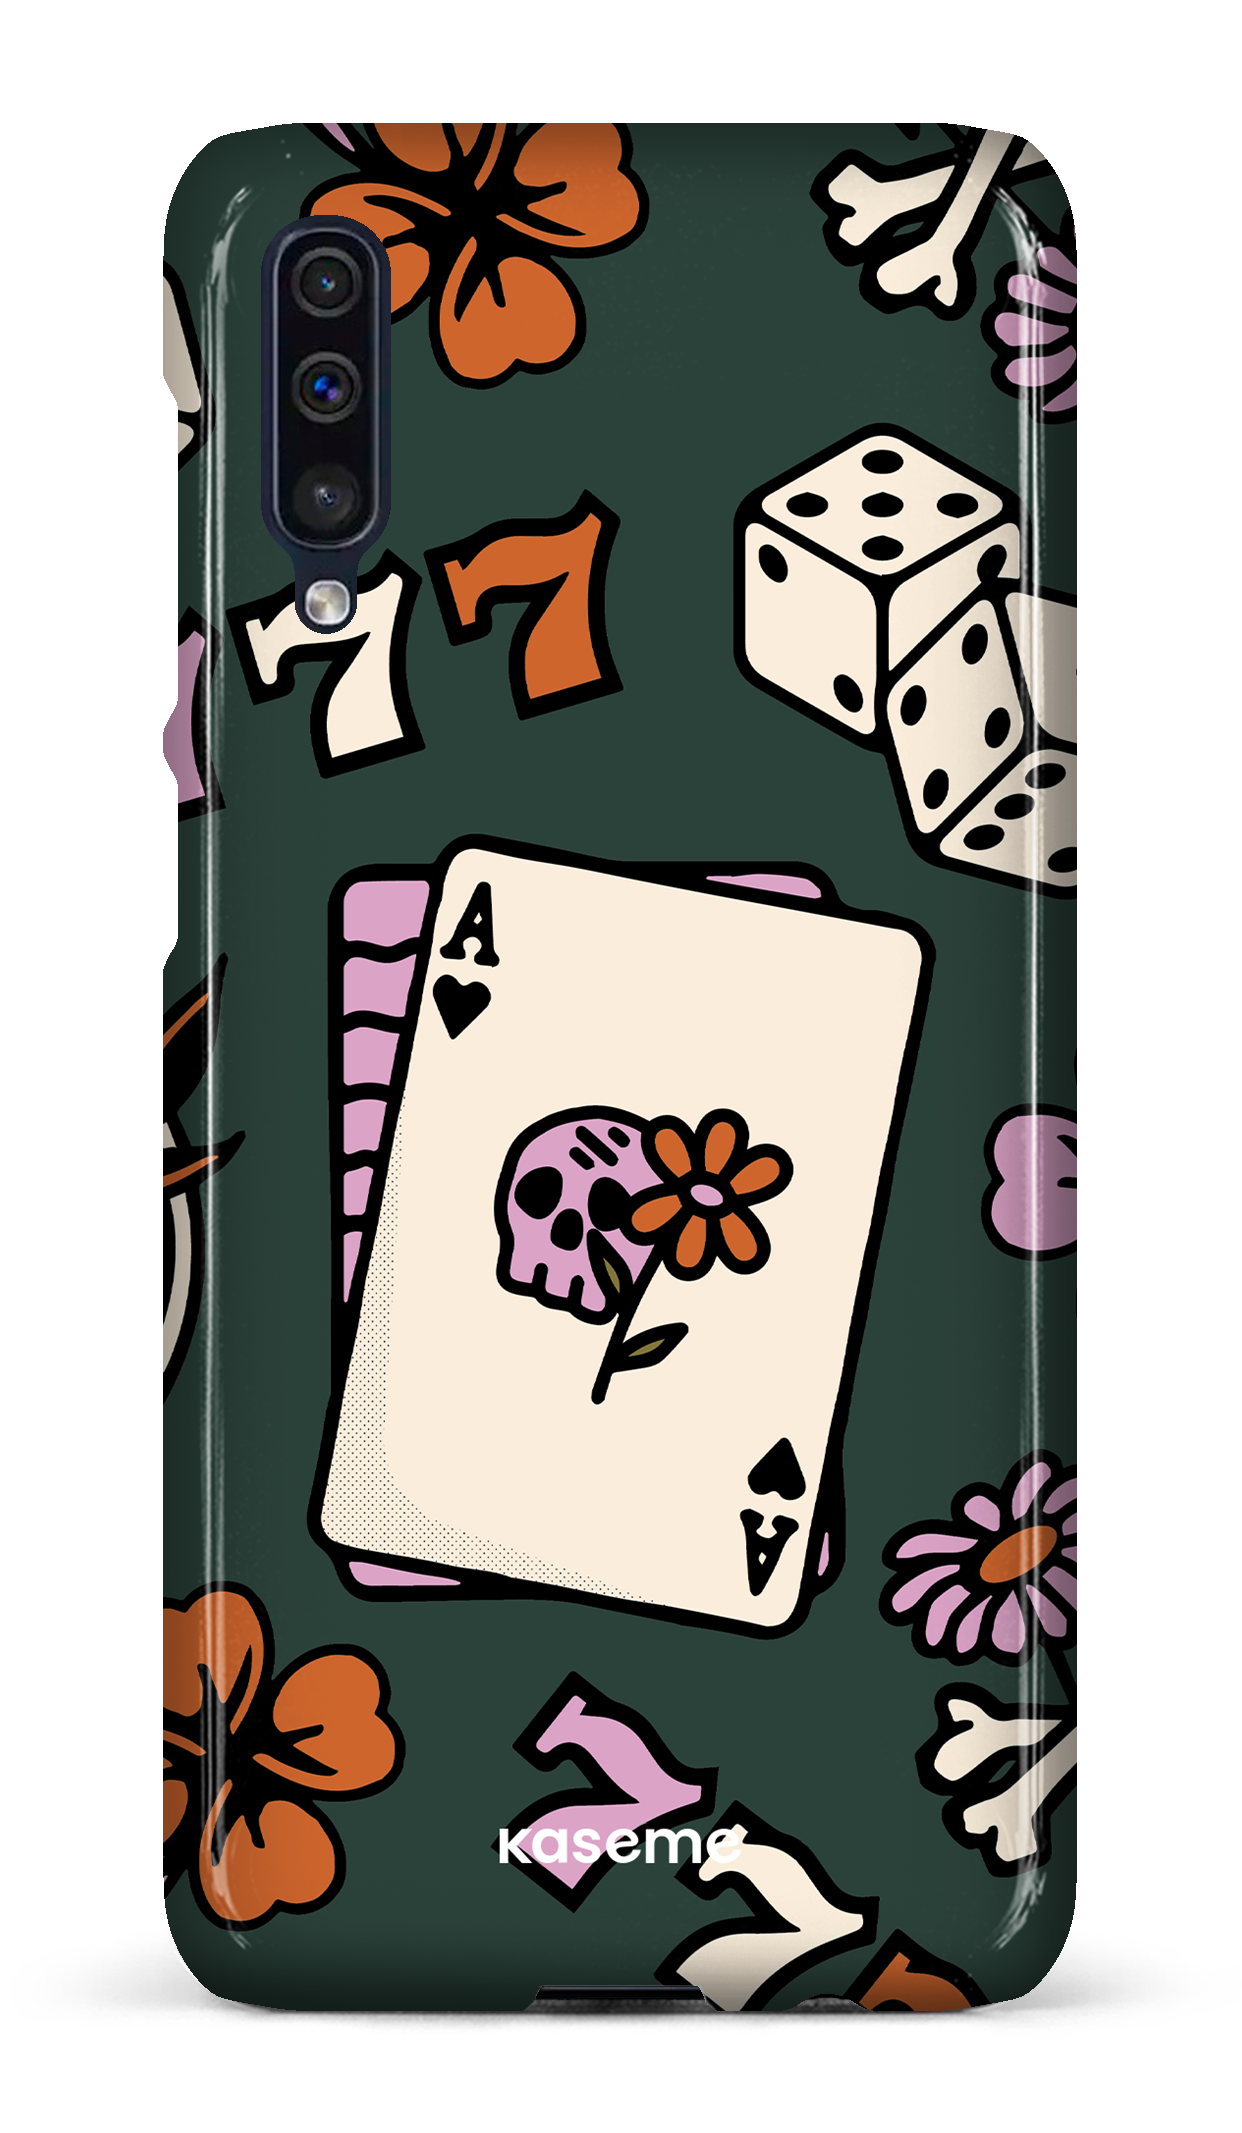 Poker Face - Galaxy A50